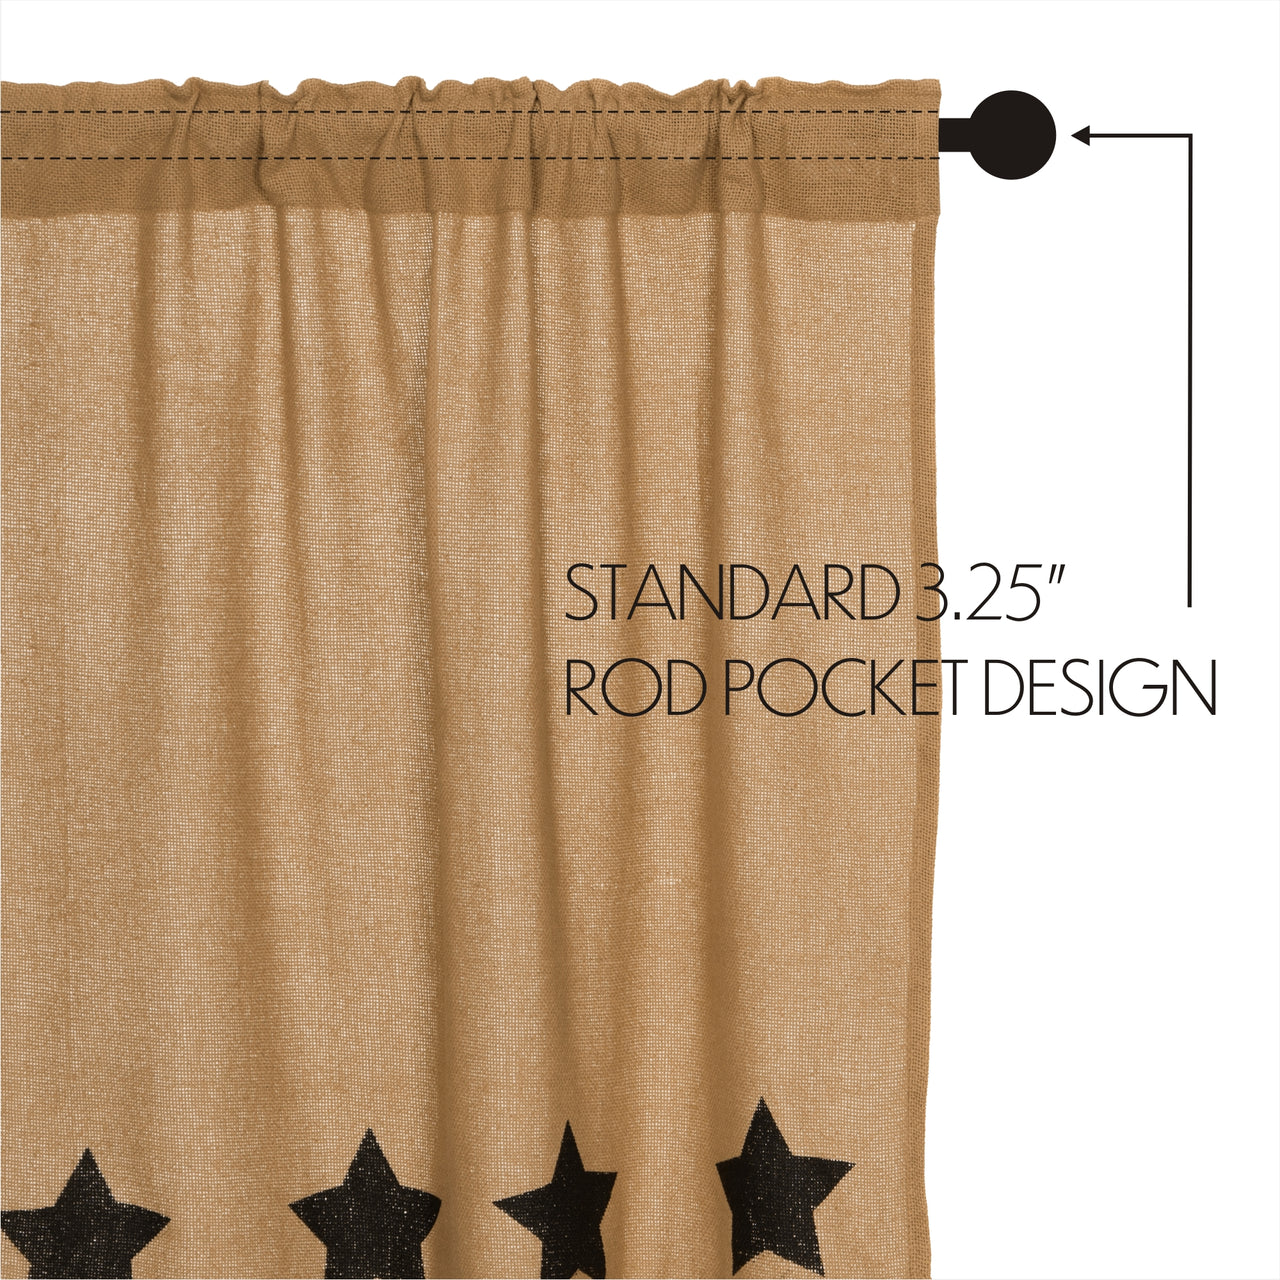 Burlap W/Black Stencil Stars Valance Curtain 16x60 VHC Brands